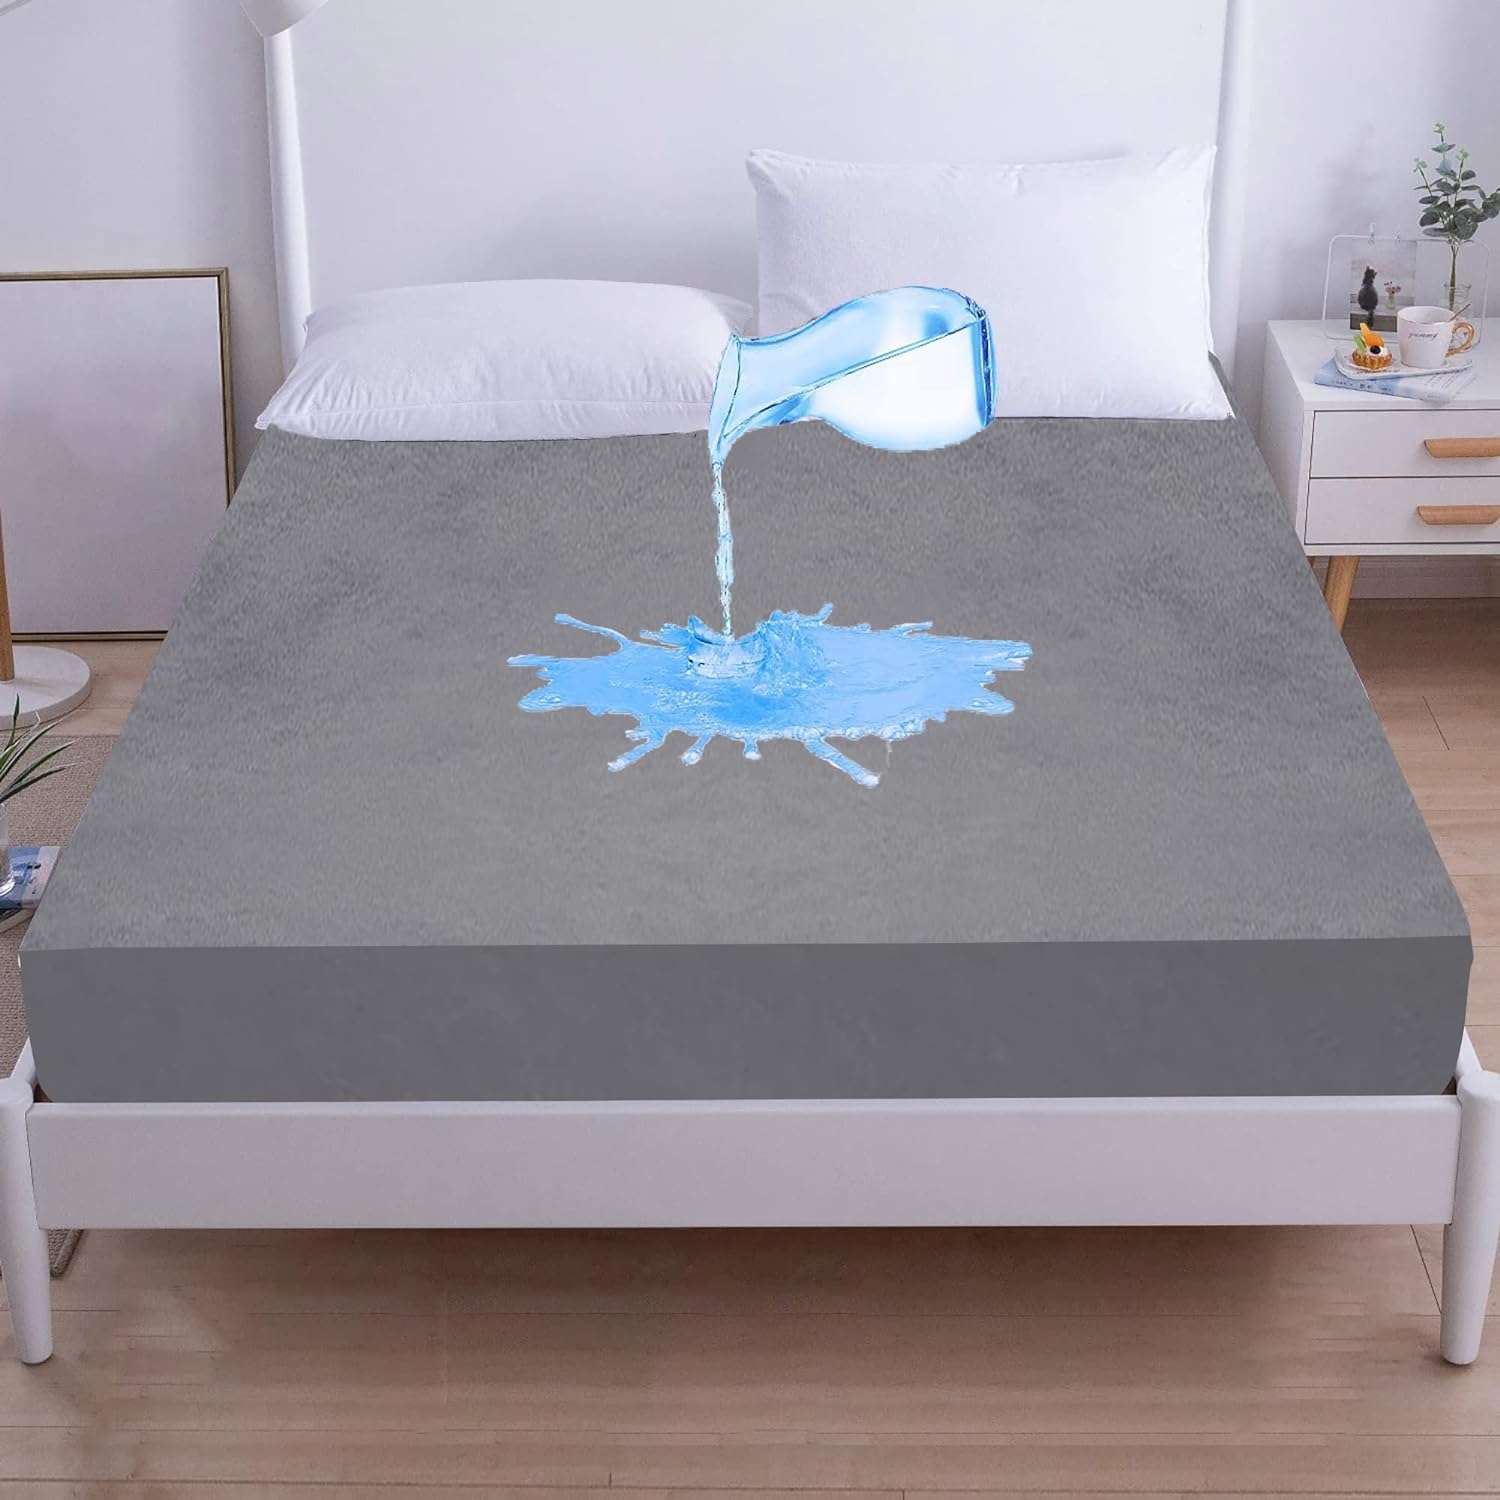 Twin size waterproof mattress cover